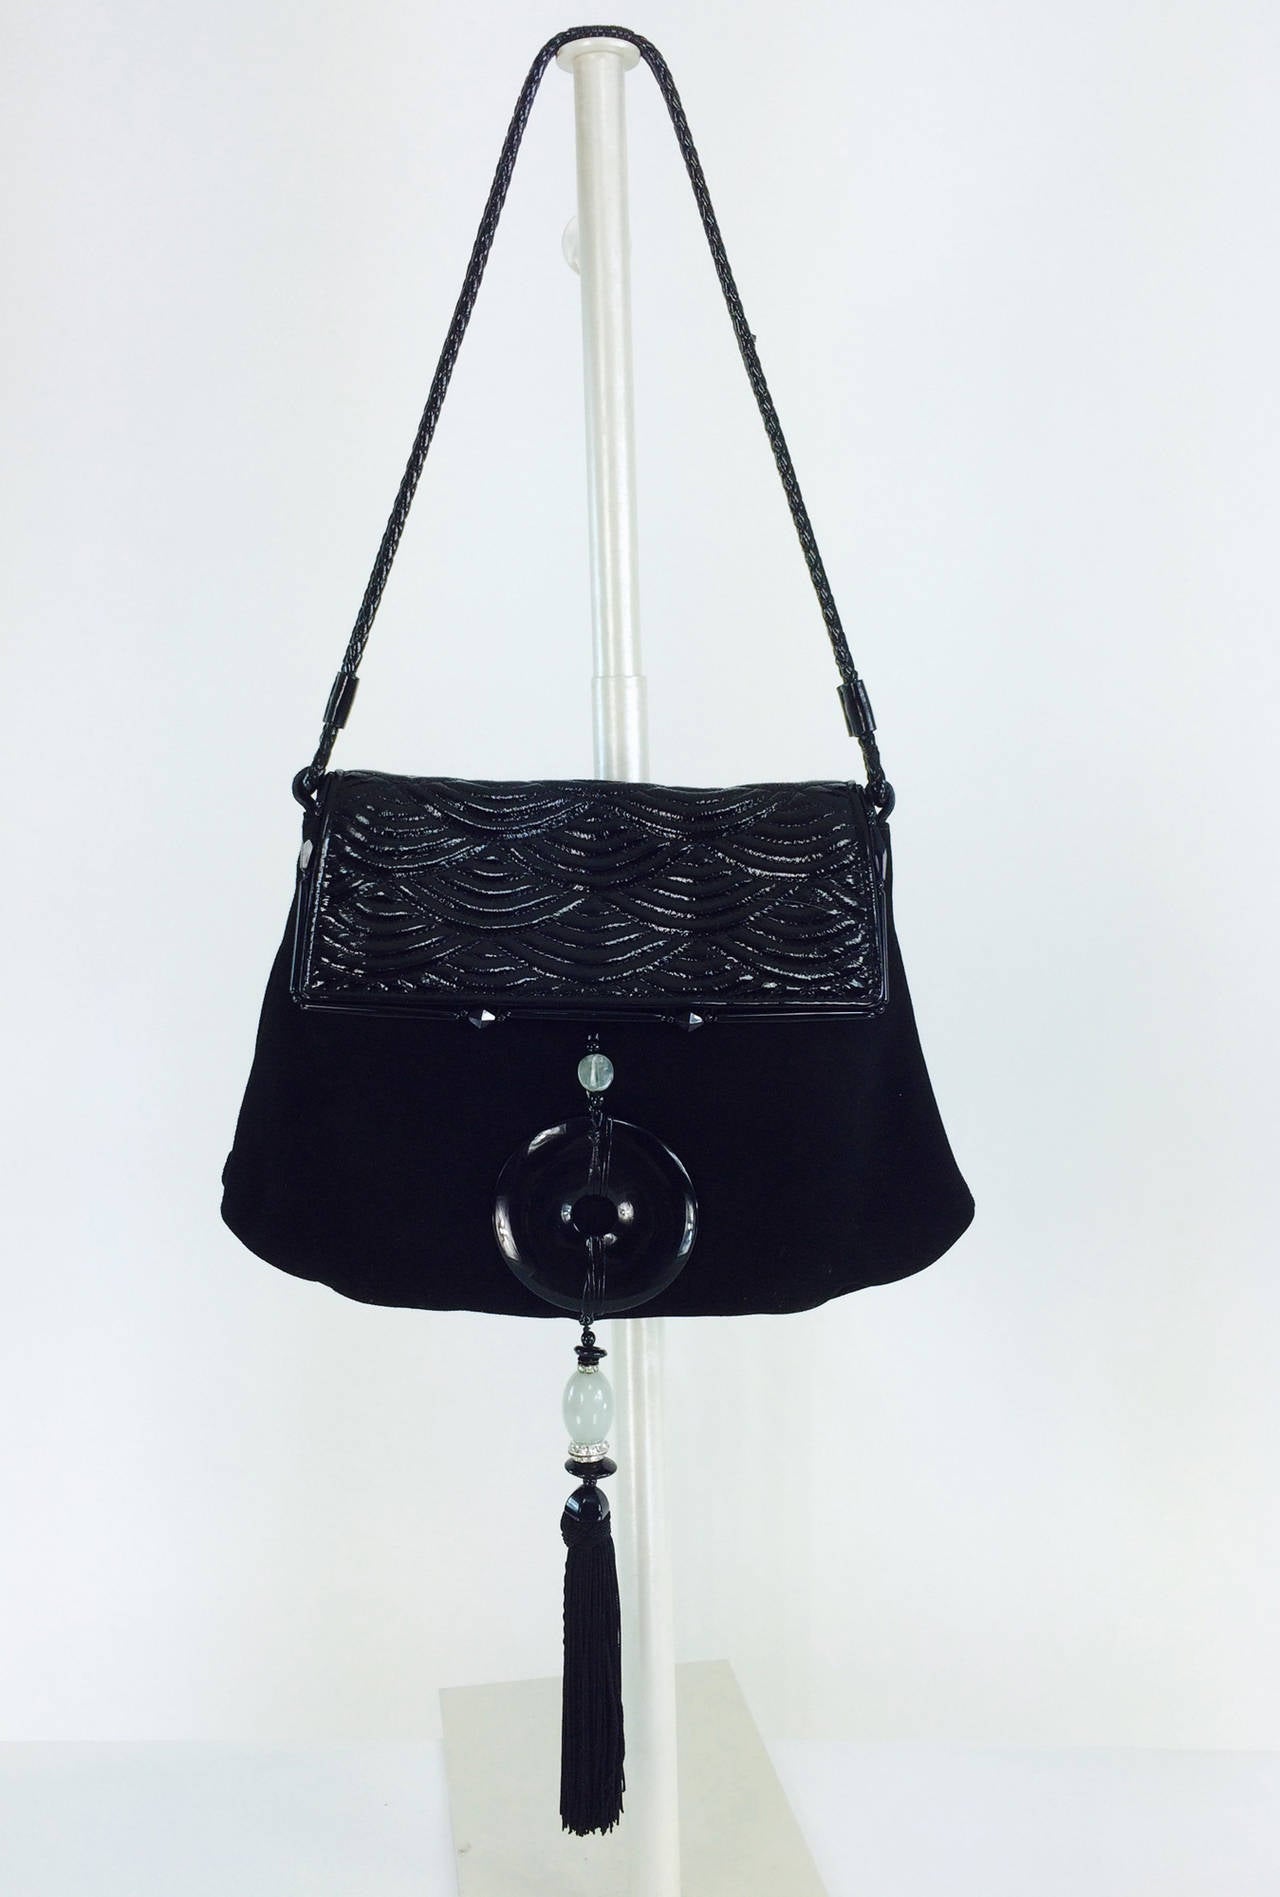 Yves St Laurent RIve Gauche black Chinoiserie evening handbag 4